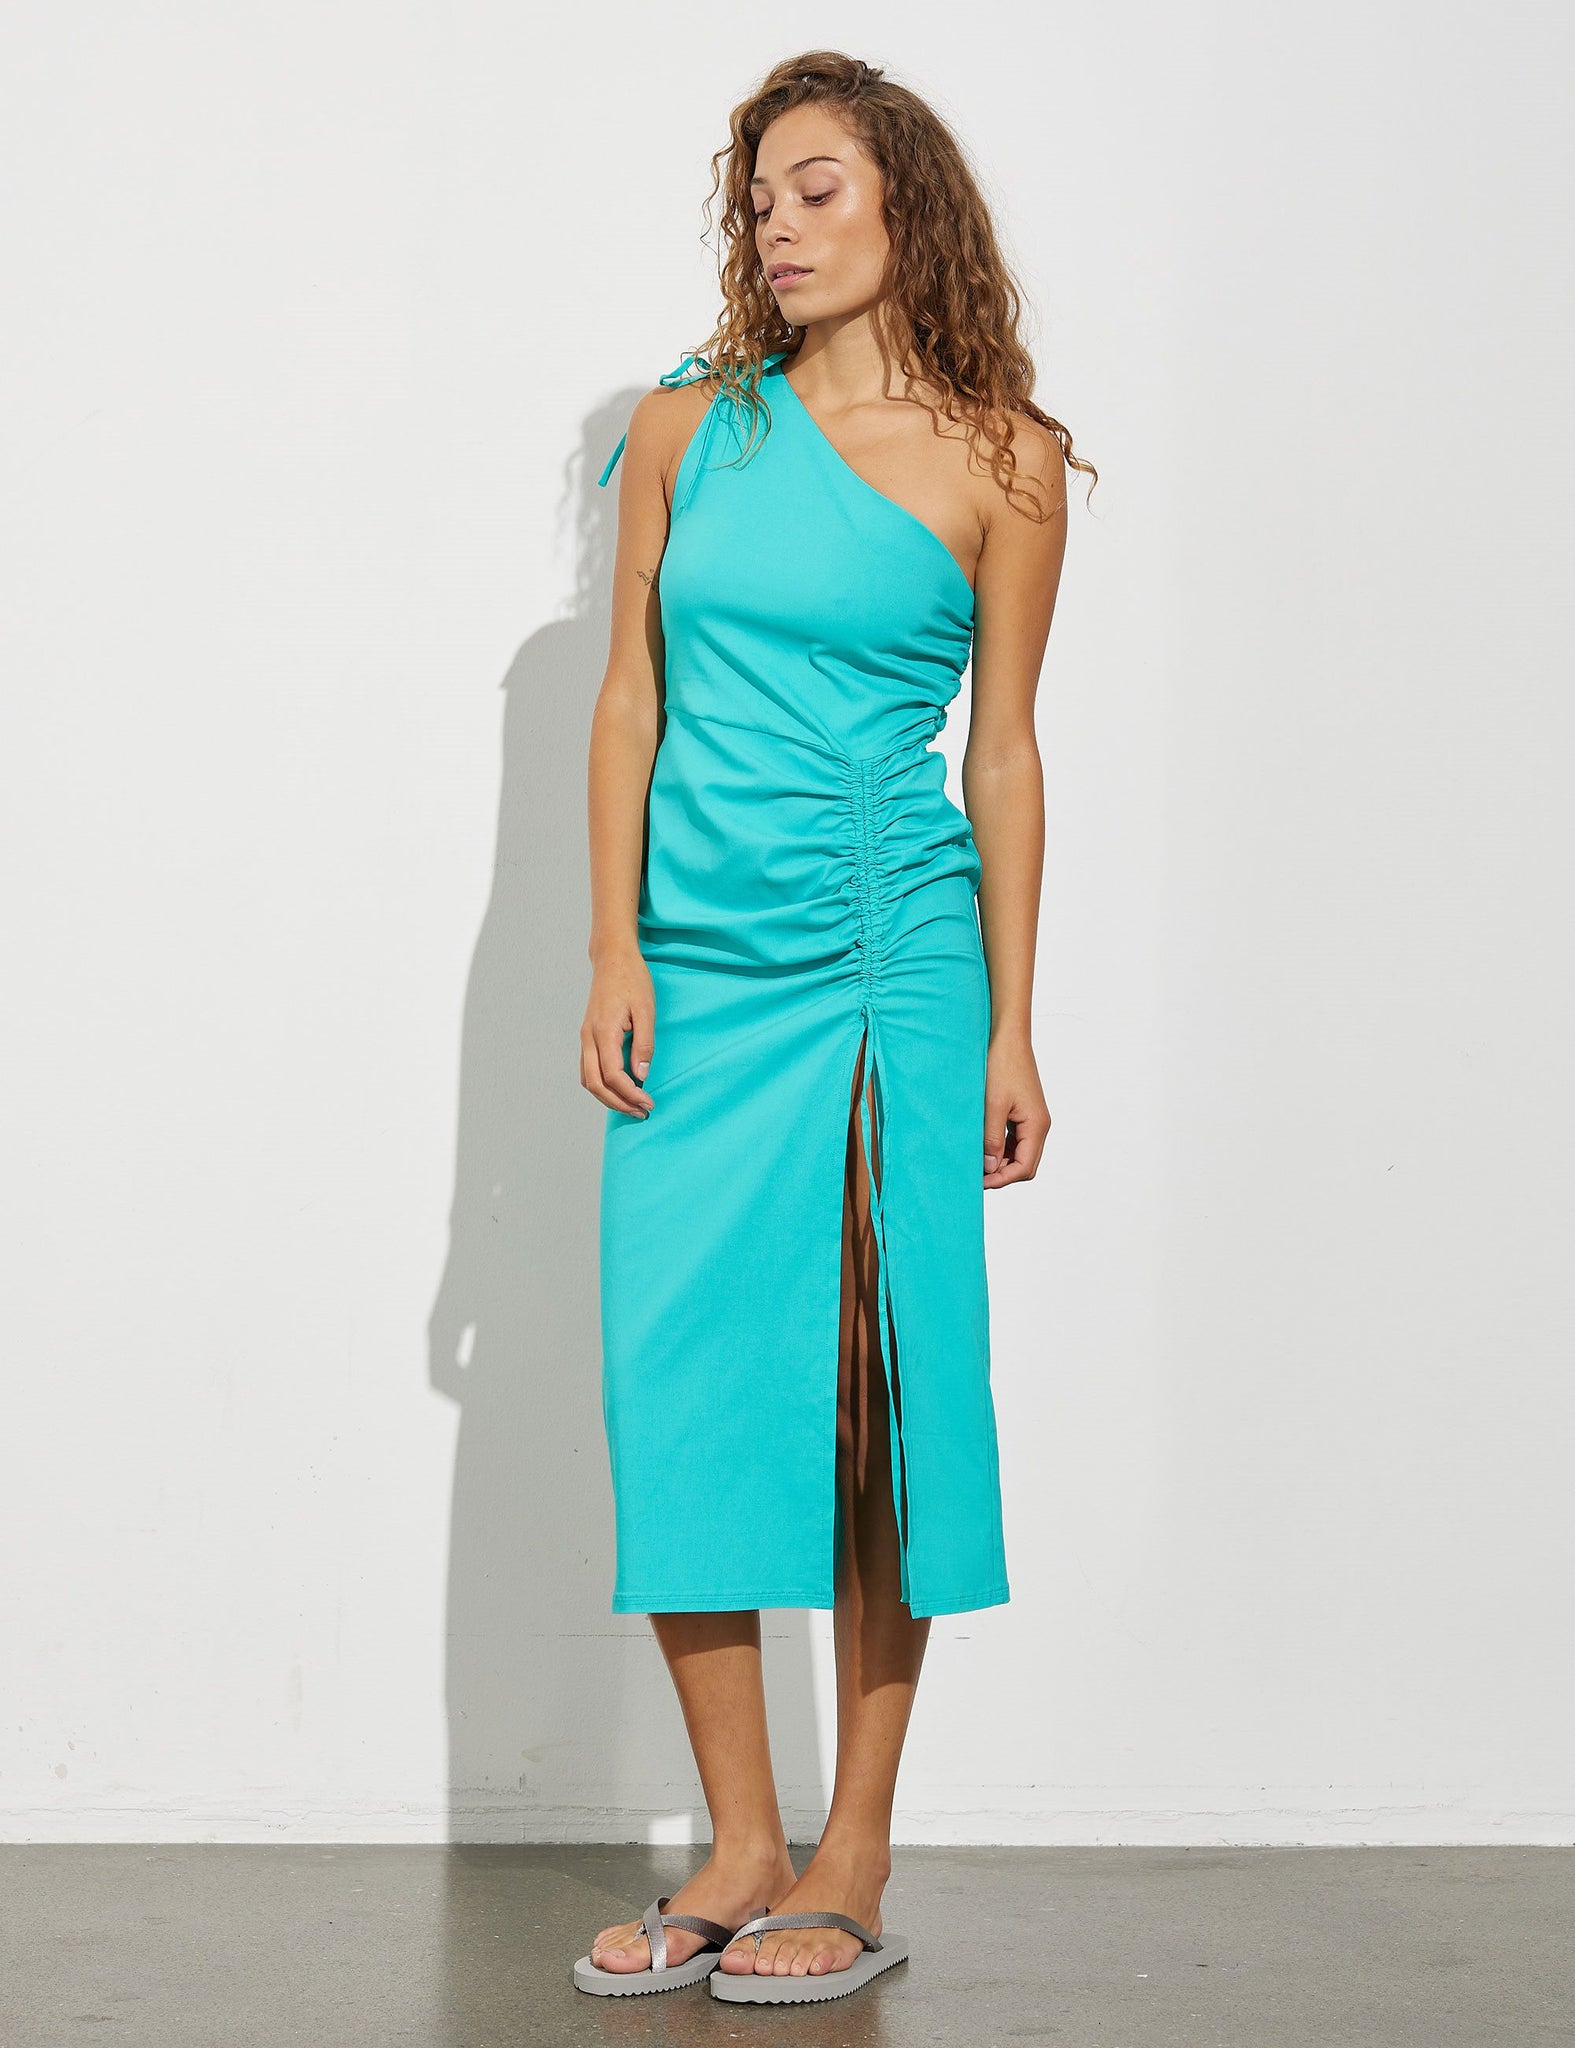 Randal-M Dress - Turquoise